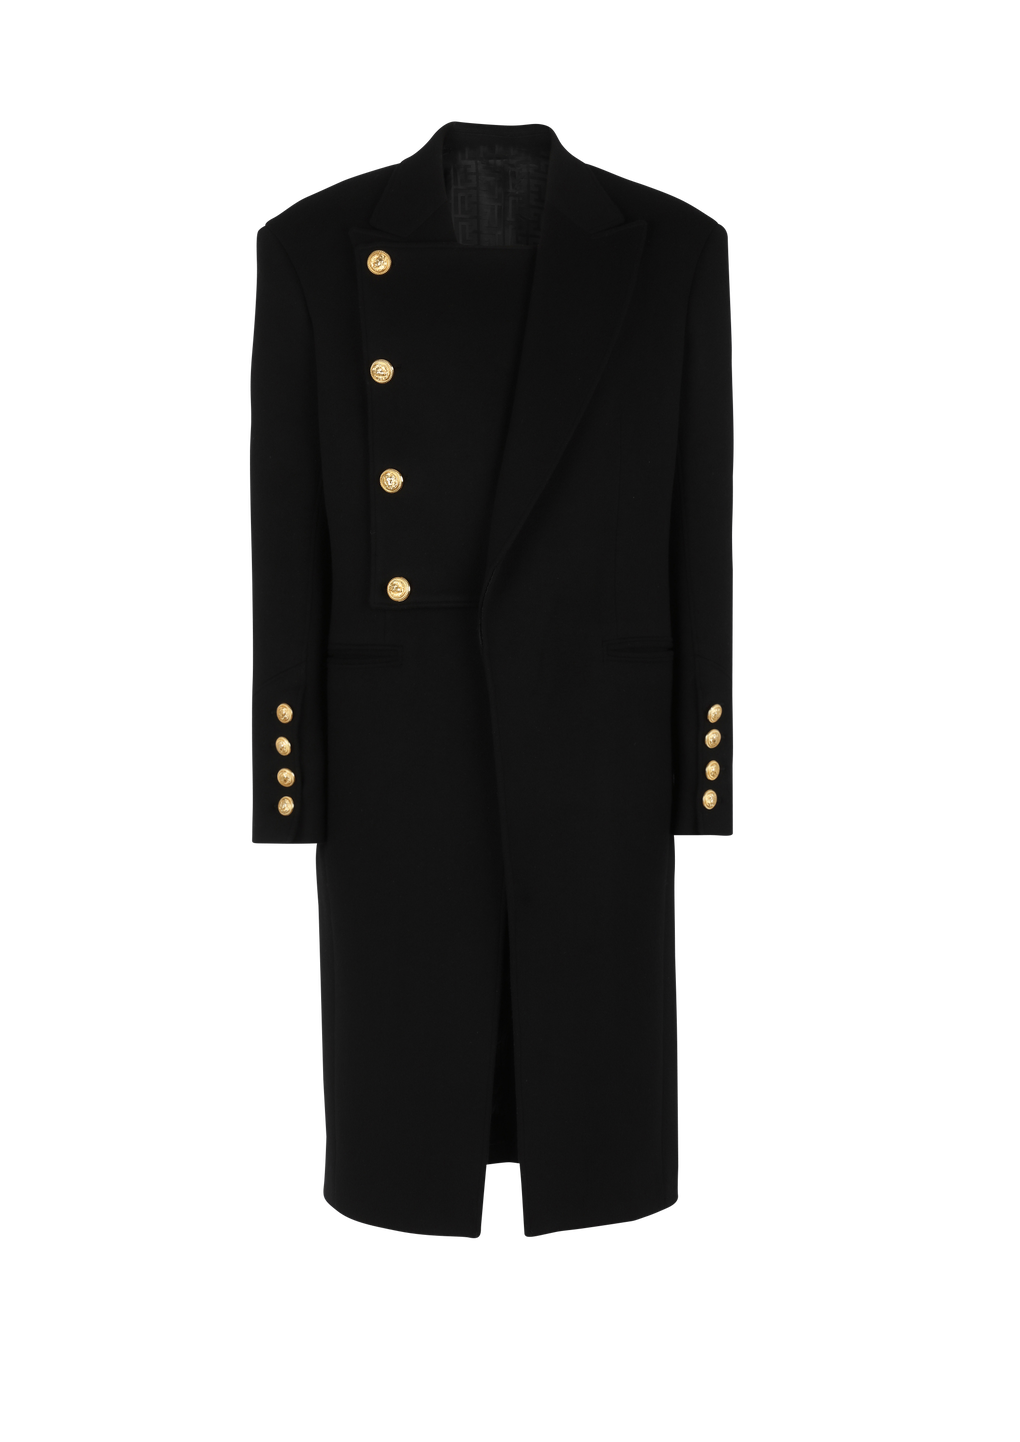 Unisex - Four-button wool coat with detachable inset jacket, black, hi-res